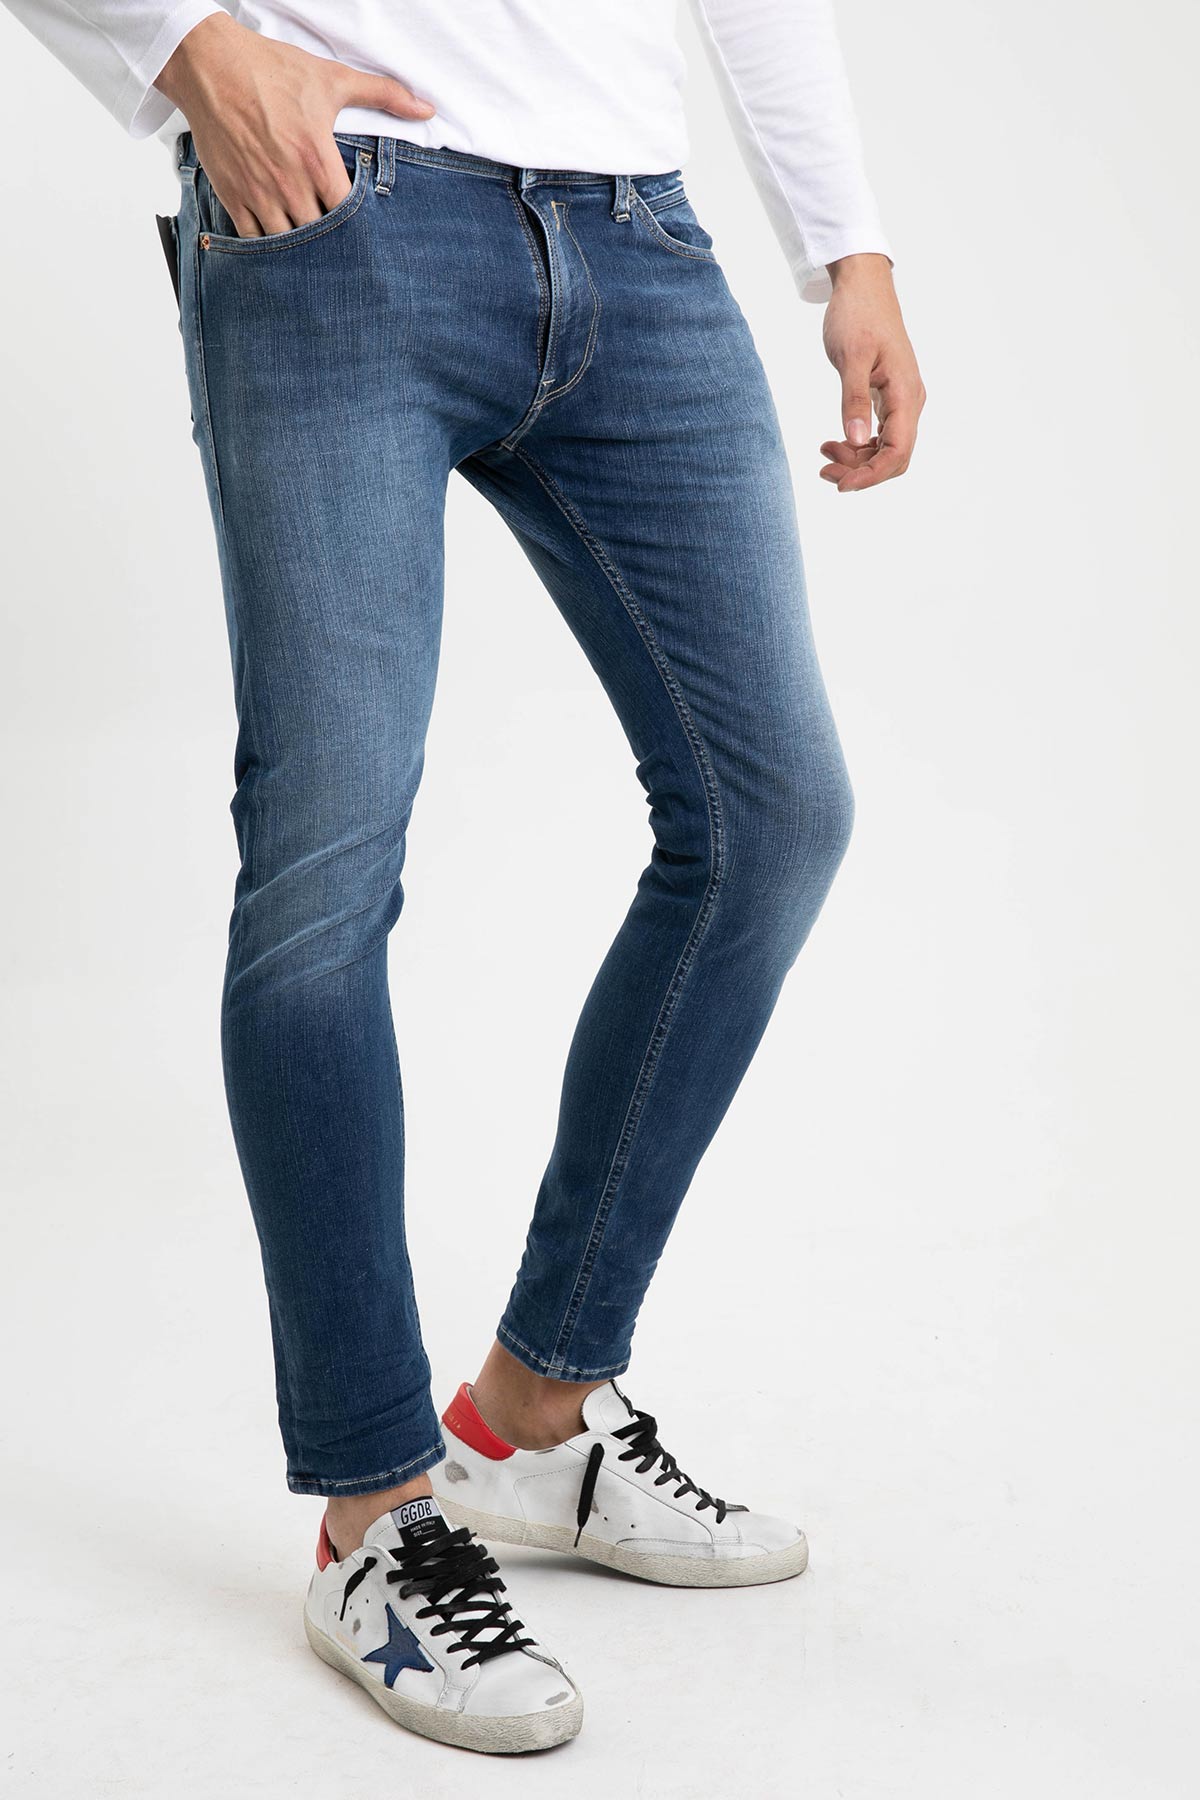 Replay Hyperflex Re-Used Skinny Fit Jondrill Jeans-Libas Trendy Fashion Store